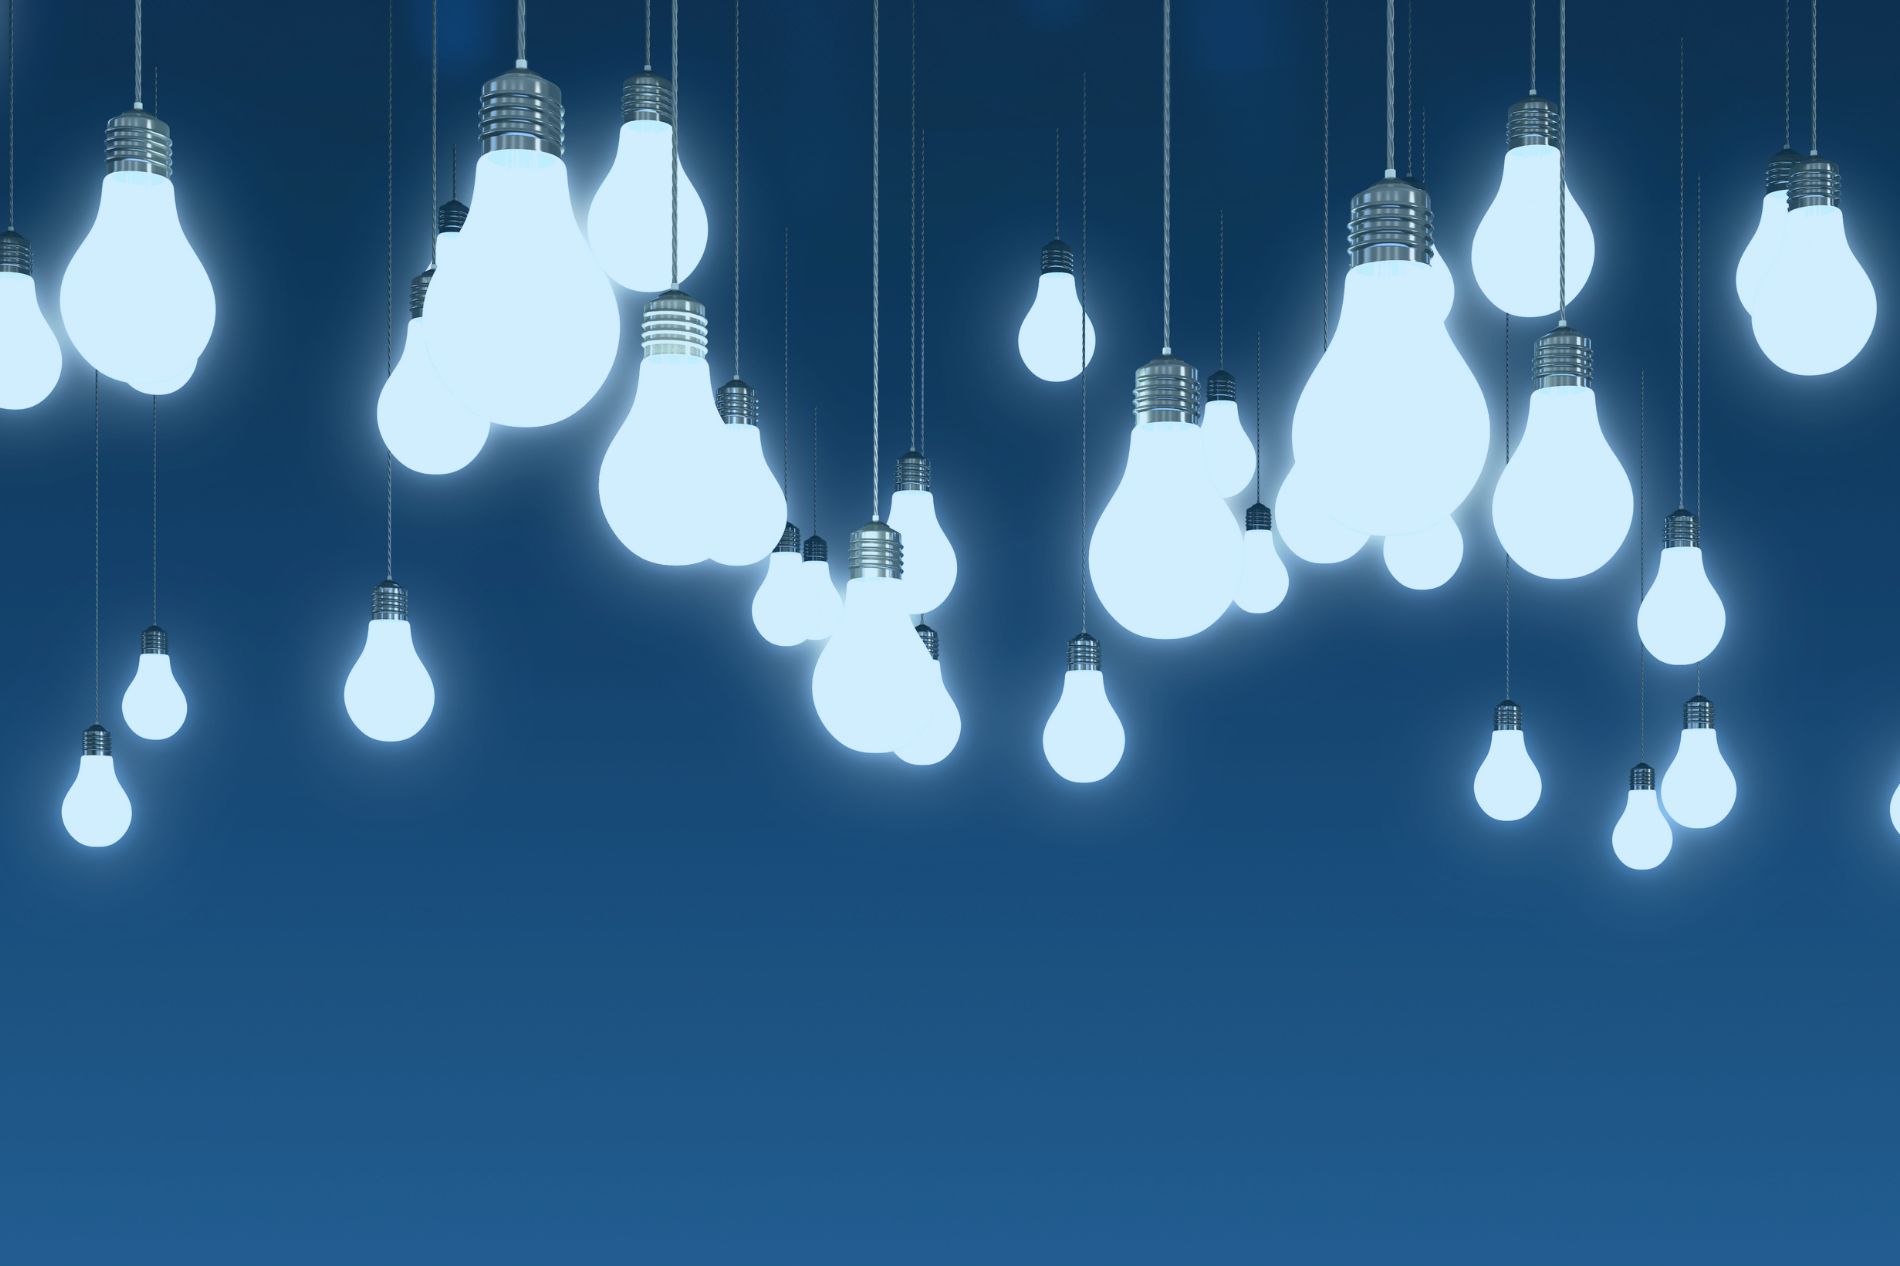 Lightbulbs and energy